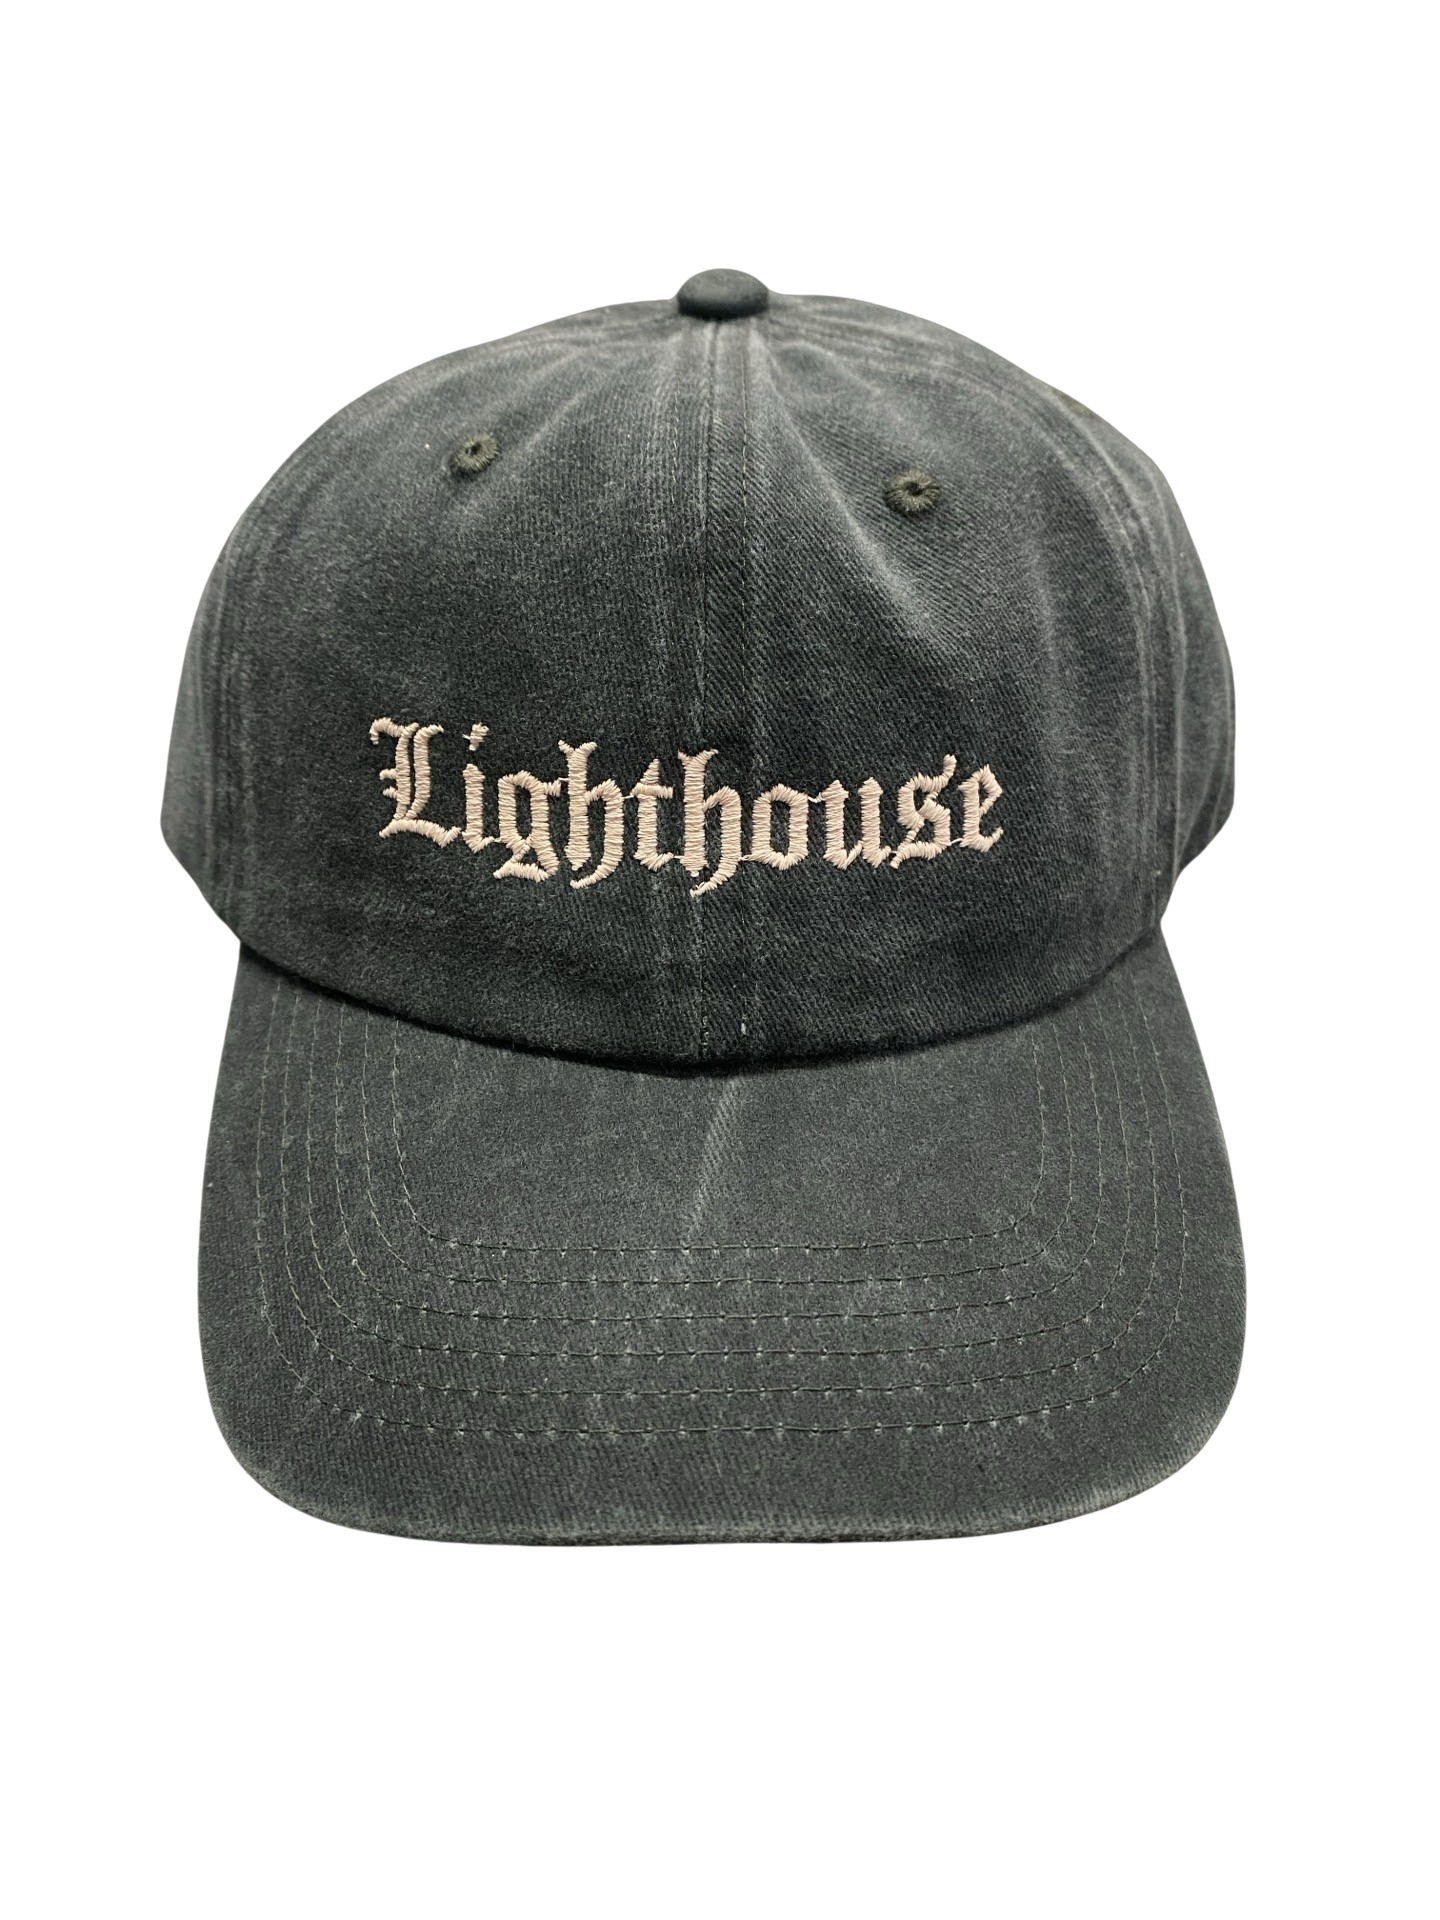 Lighthouse Old English Hat